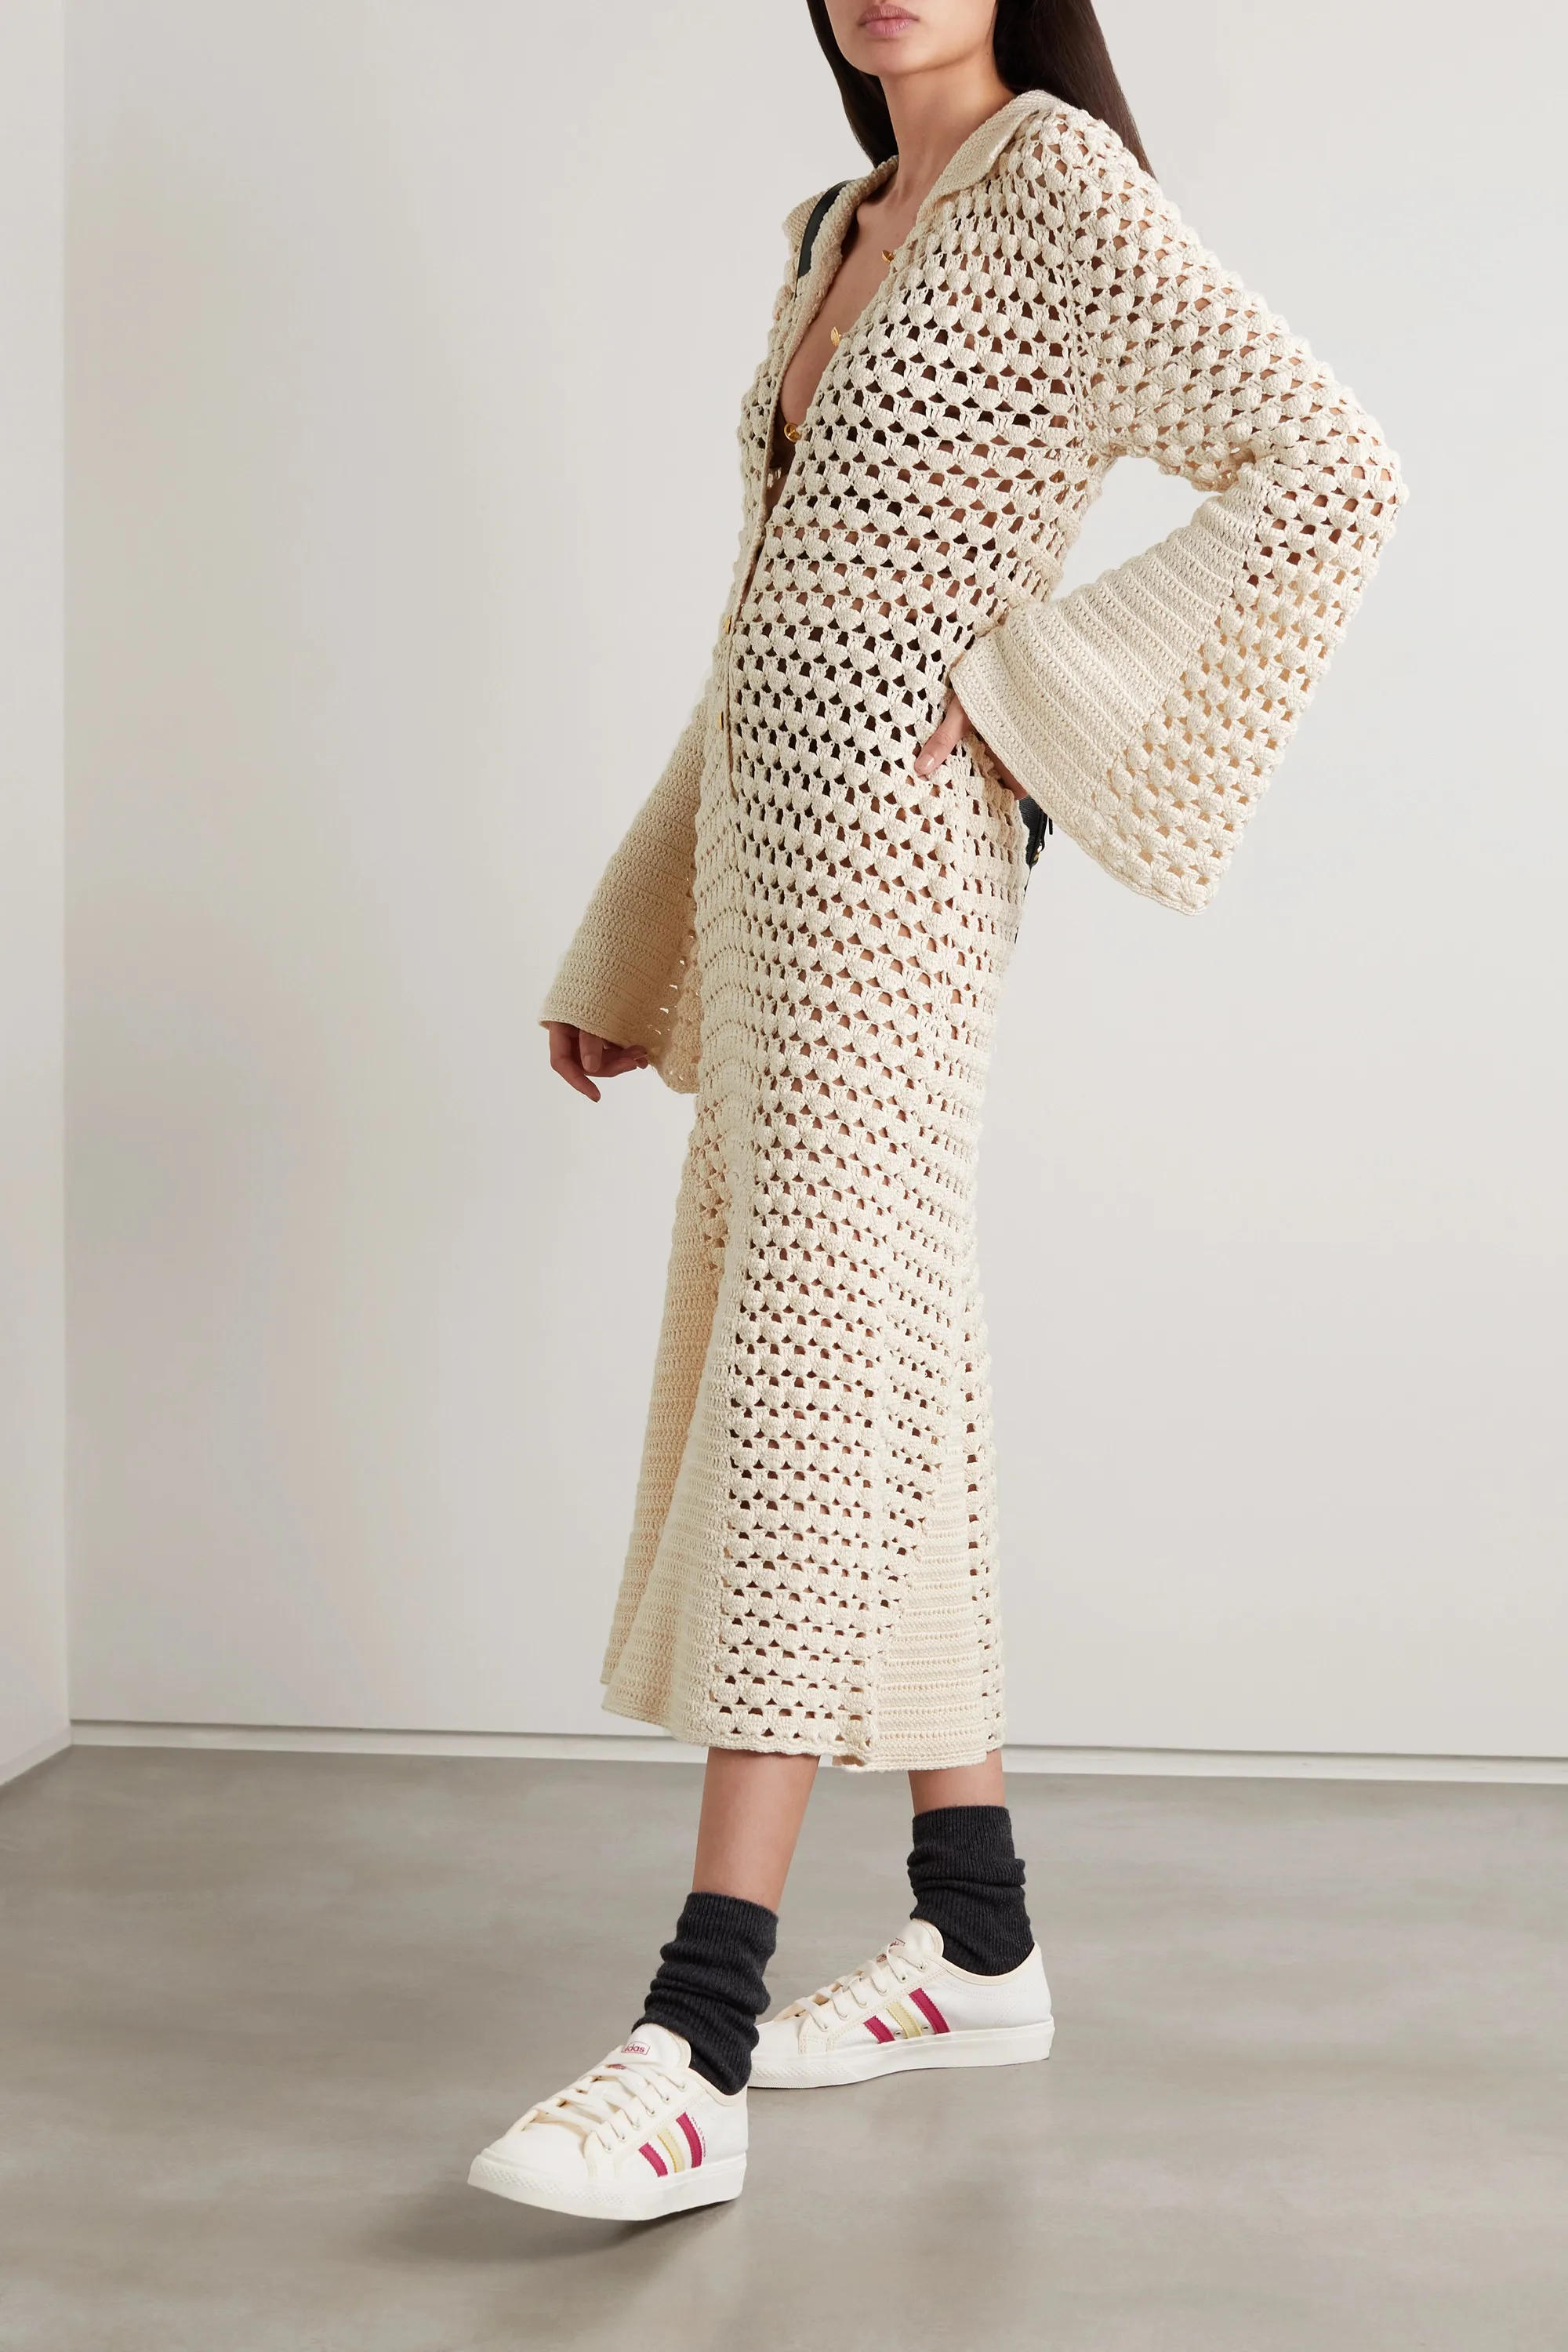 Summer Hollow Crochet V Neck Long Sleeve Bell Sleeve Cotton Pleated Skirt Knitted Dress Customized